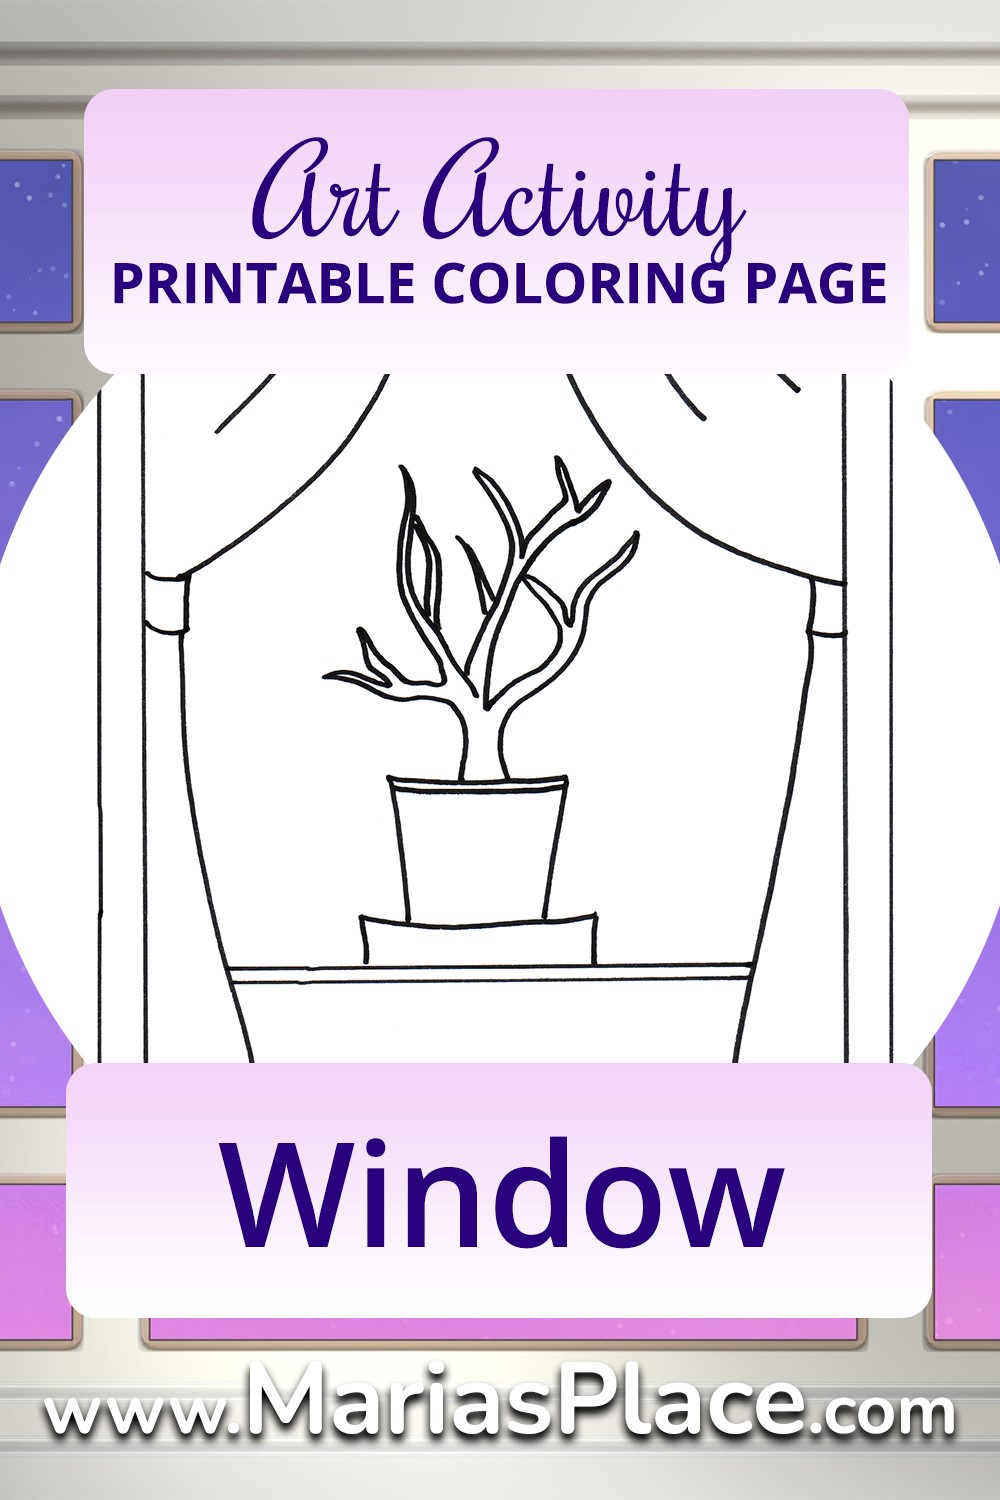 Coloring – Window